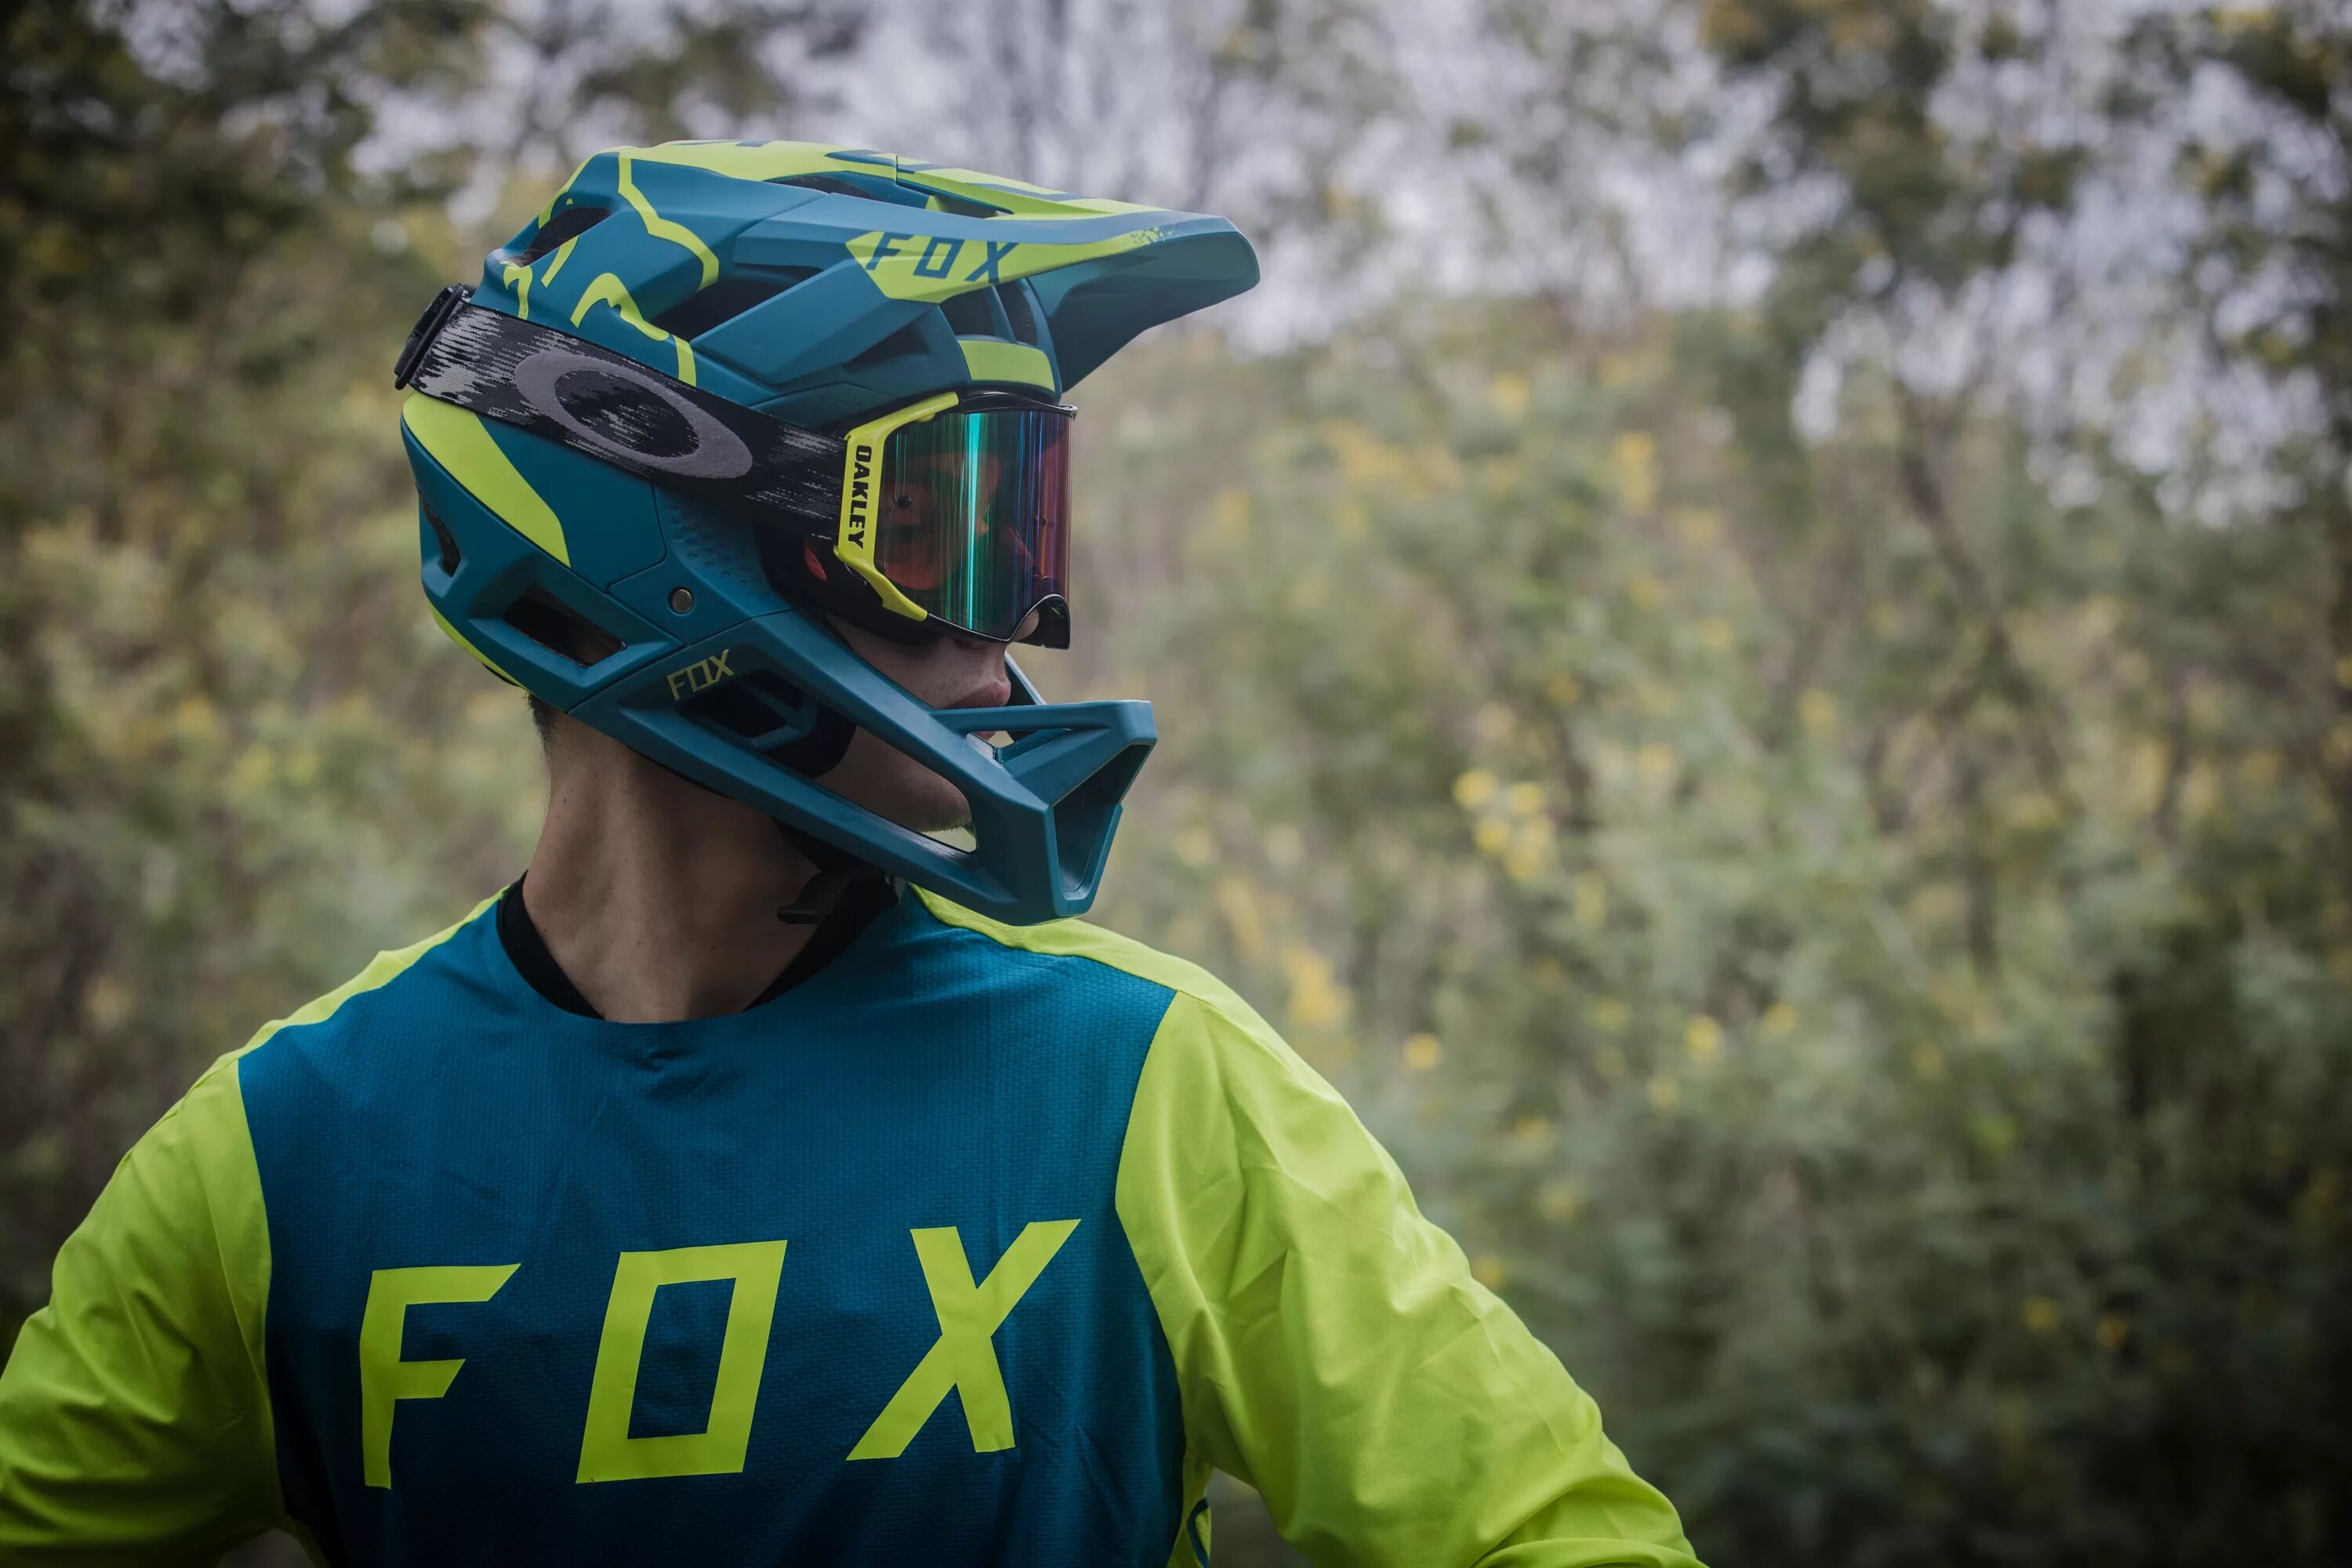 Шлем Fox Proframe. Fox Vapor шлем Proframe. Full face Fox Helmet Proframe. Велошлем Fox Proframe Moth Helmet. Код fox